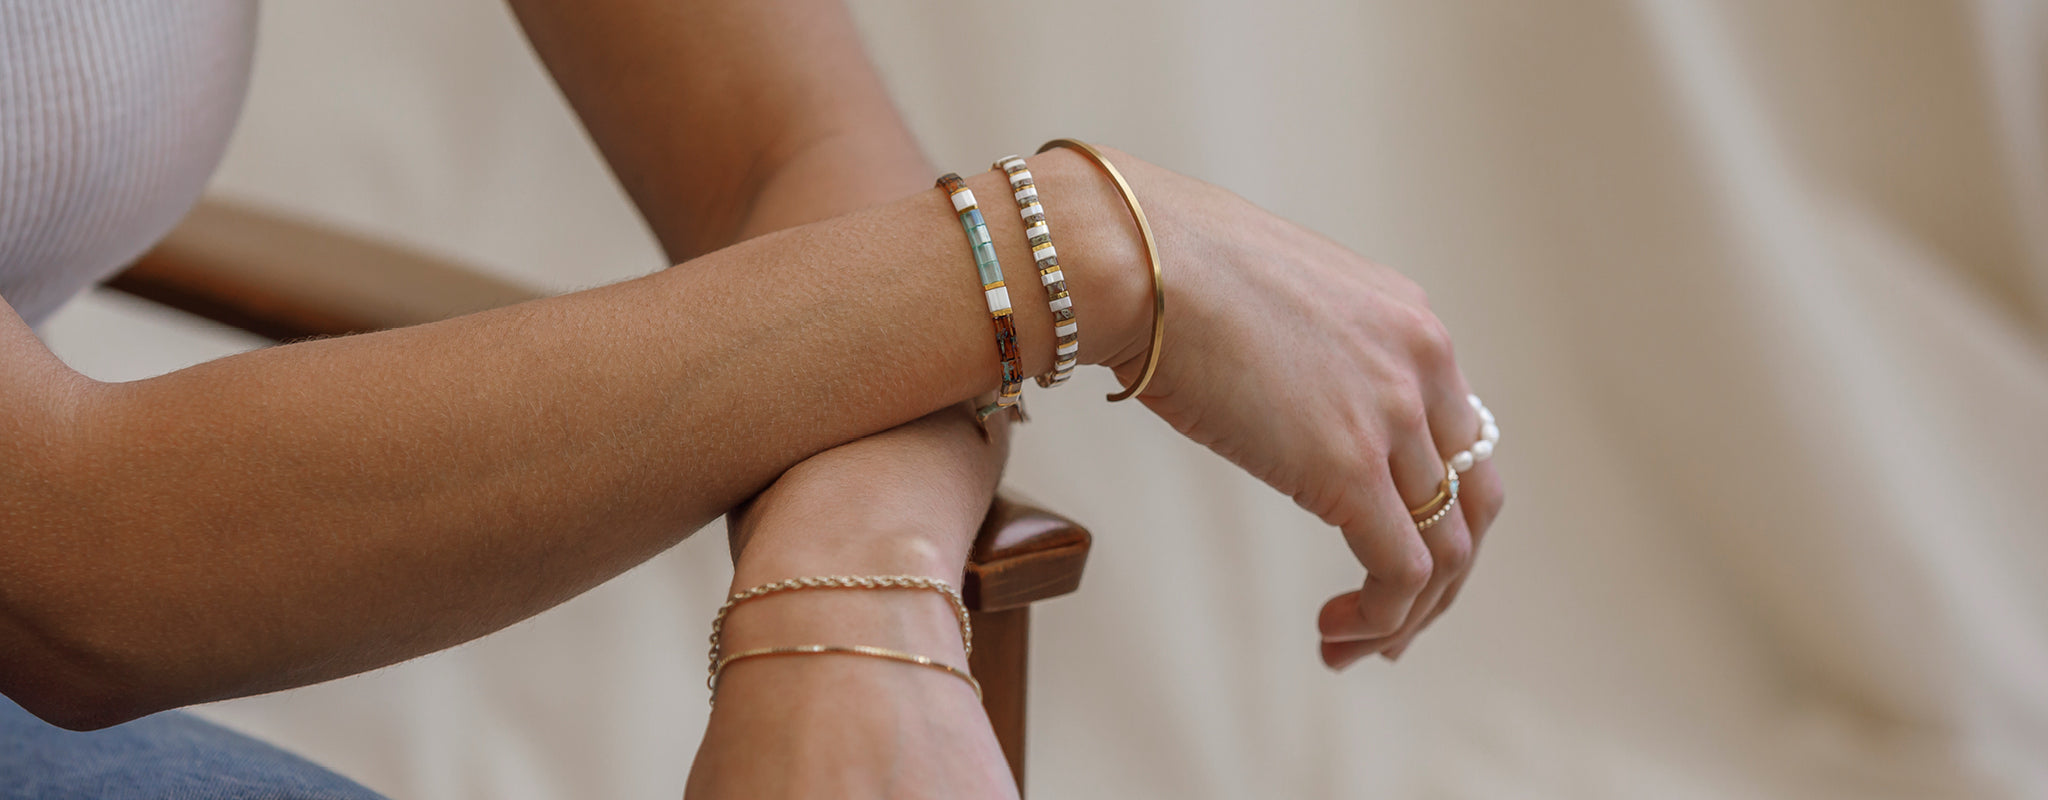 Cuff Bracelets, Jewelry